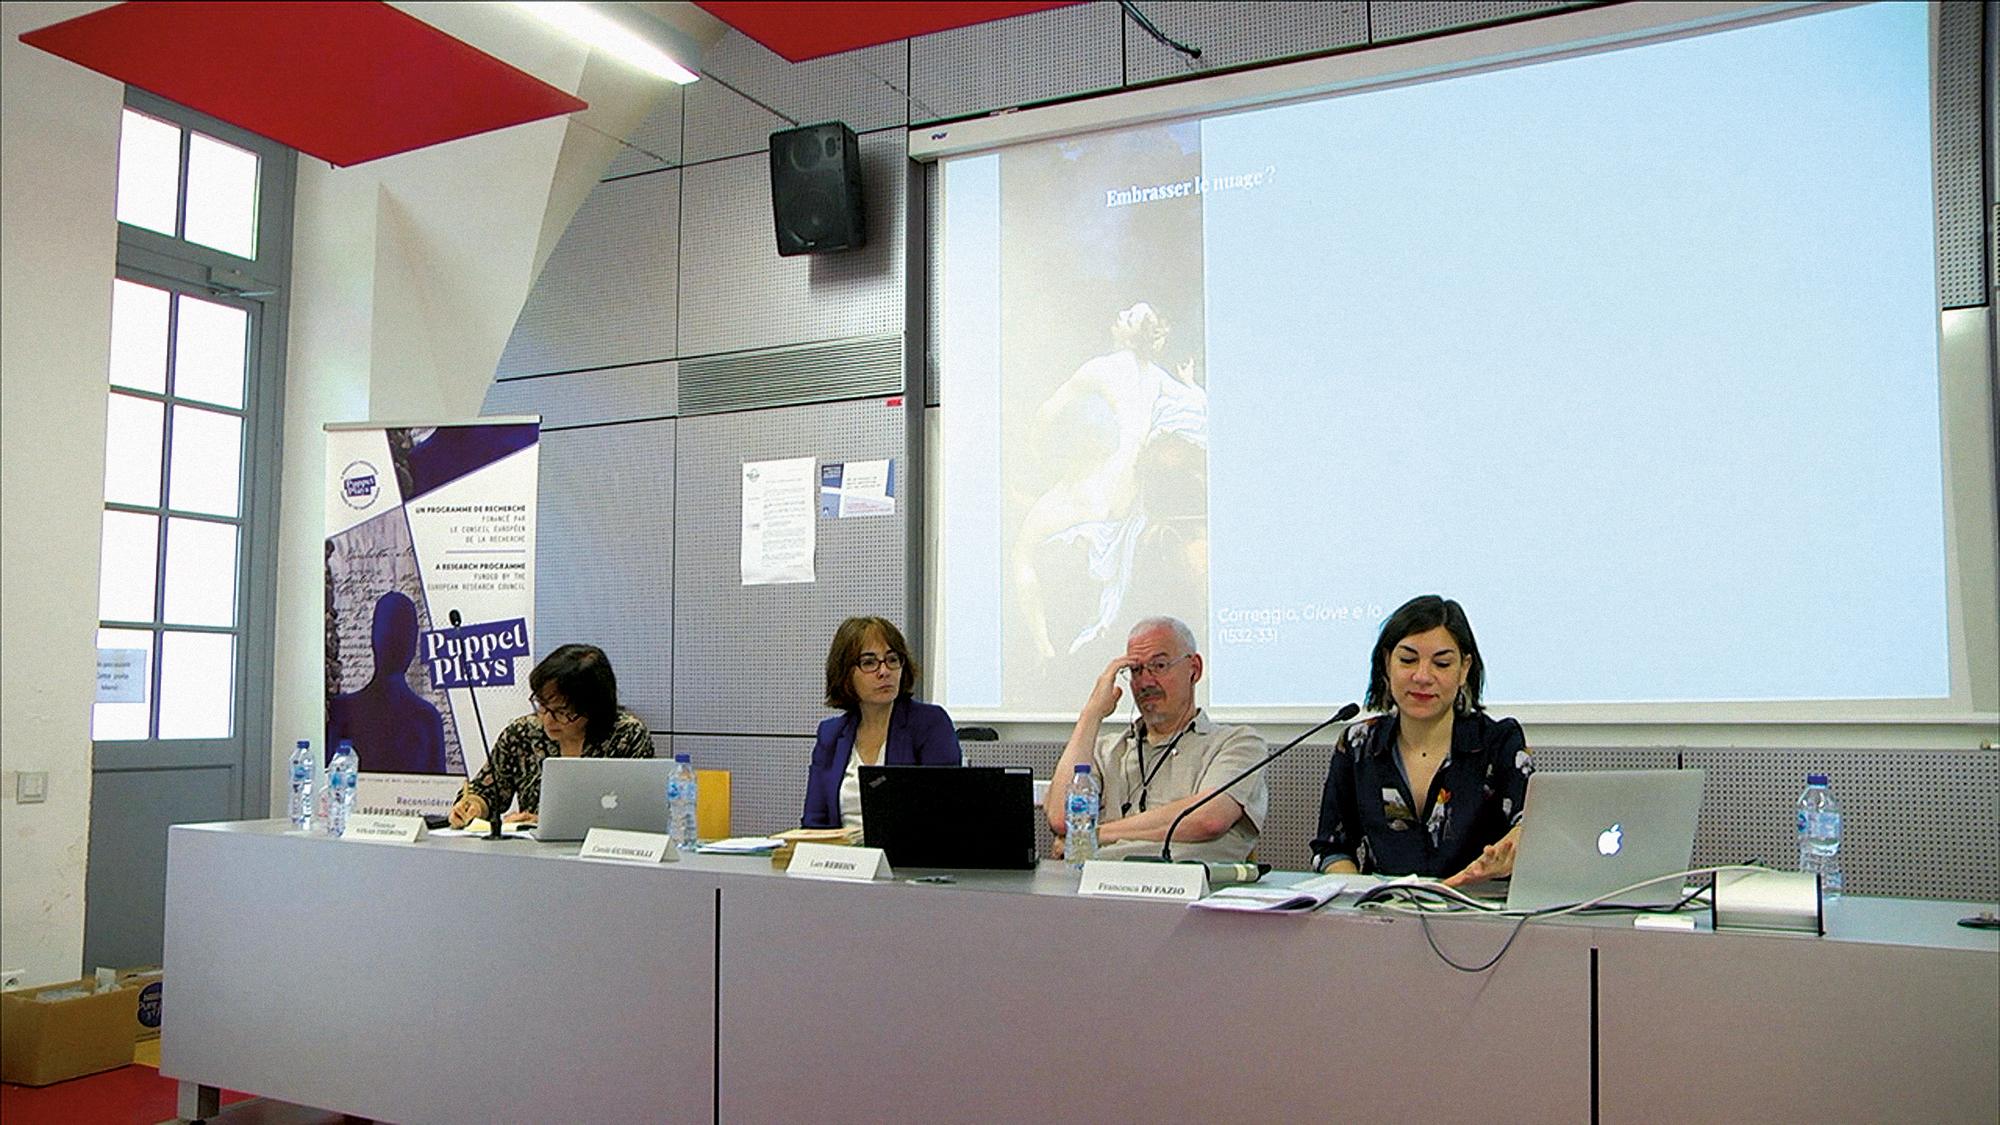 Florence Thérond, Carole Guidicelli, Lars Rebehn und Francesca Di Fazio bei der PuppetPlays Konferenz.